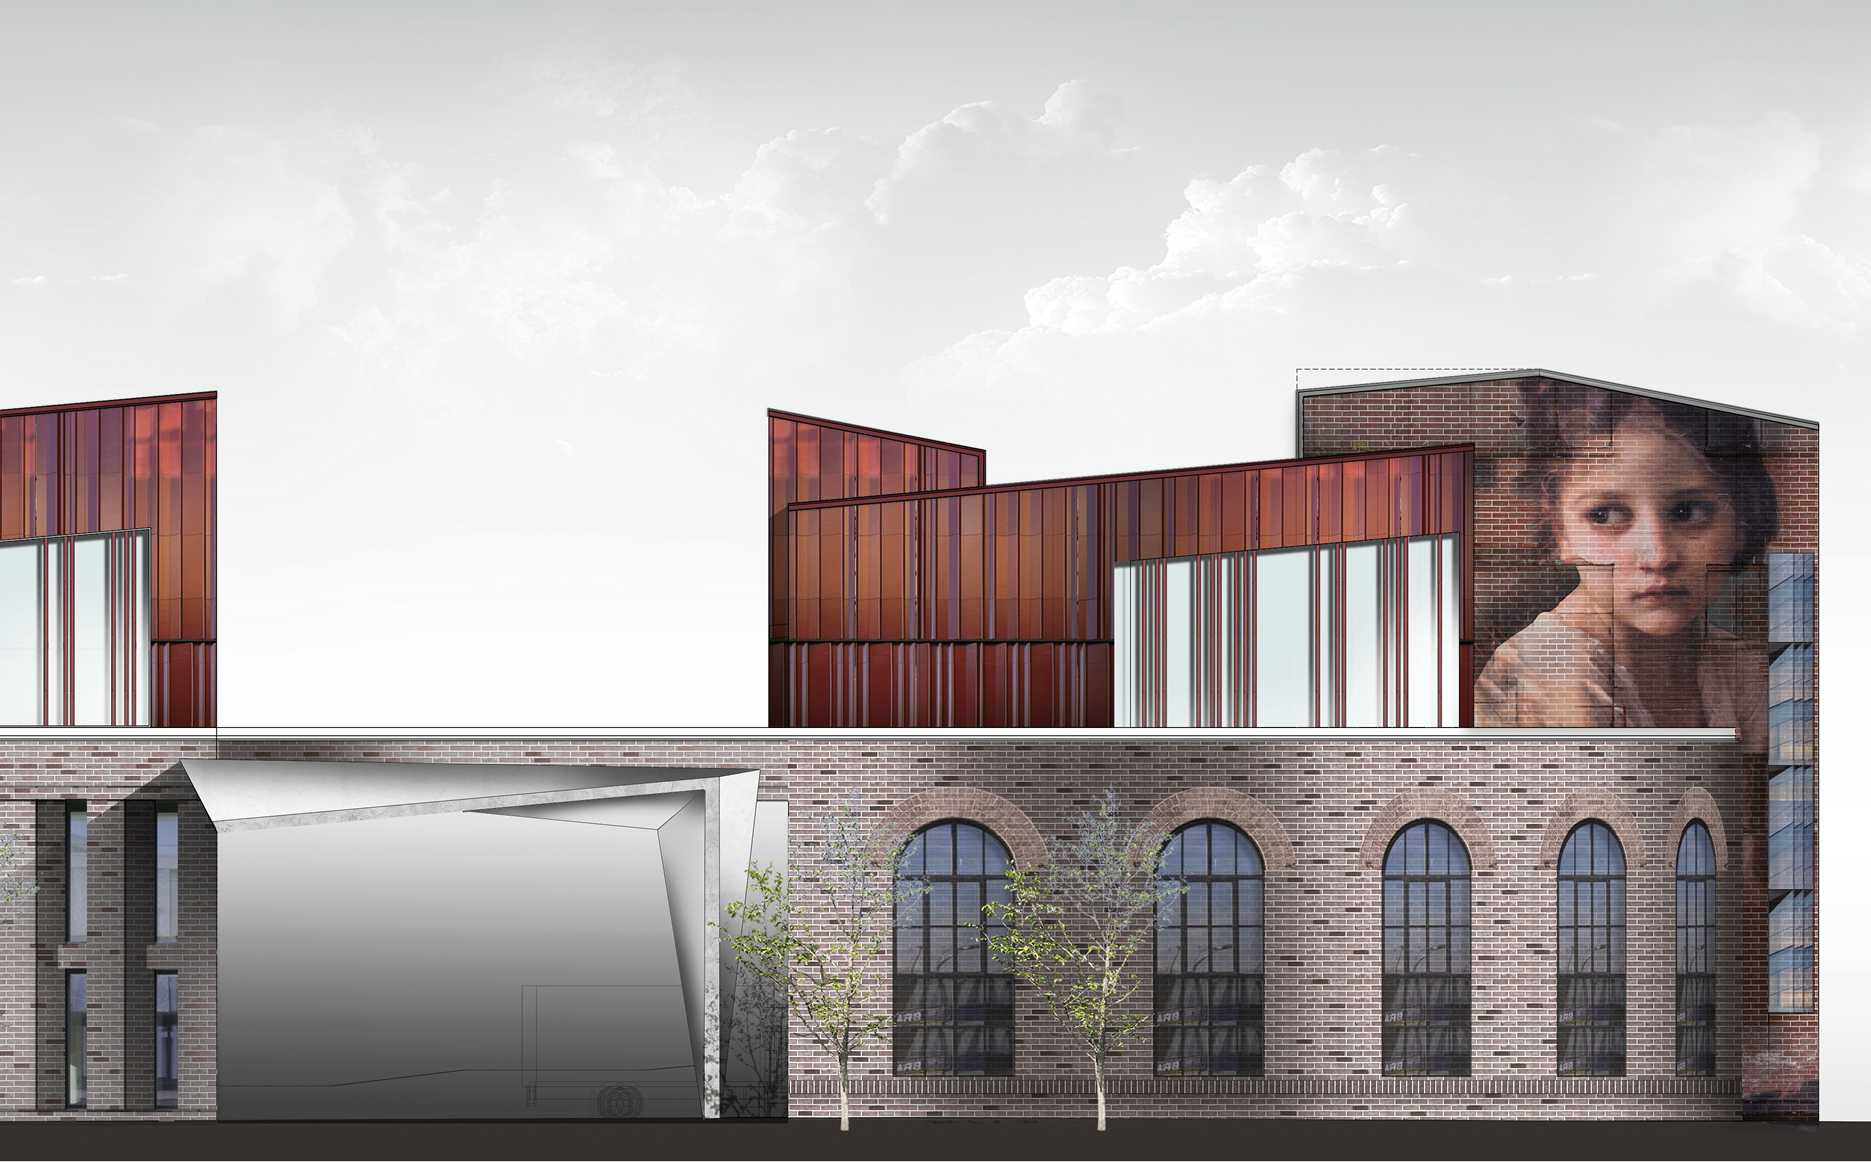 alt="Warehouse facade concept with brickwork and corregated iron cladding"